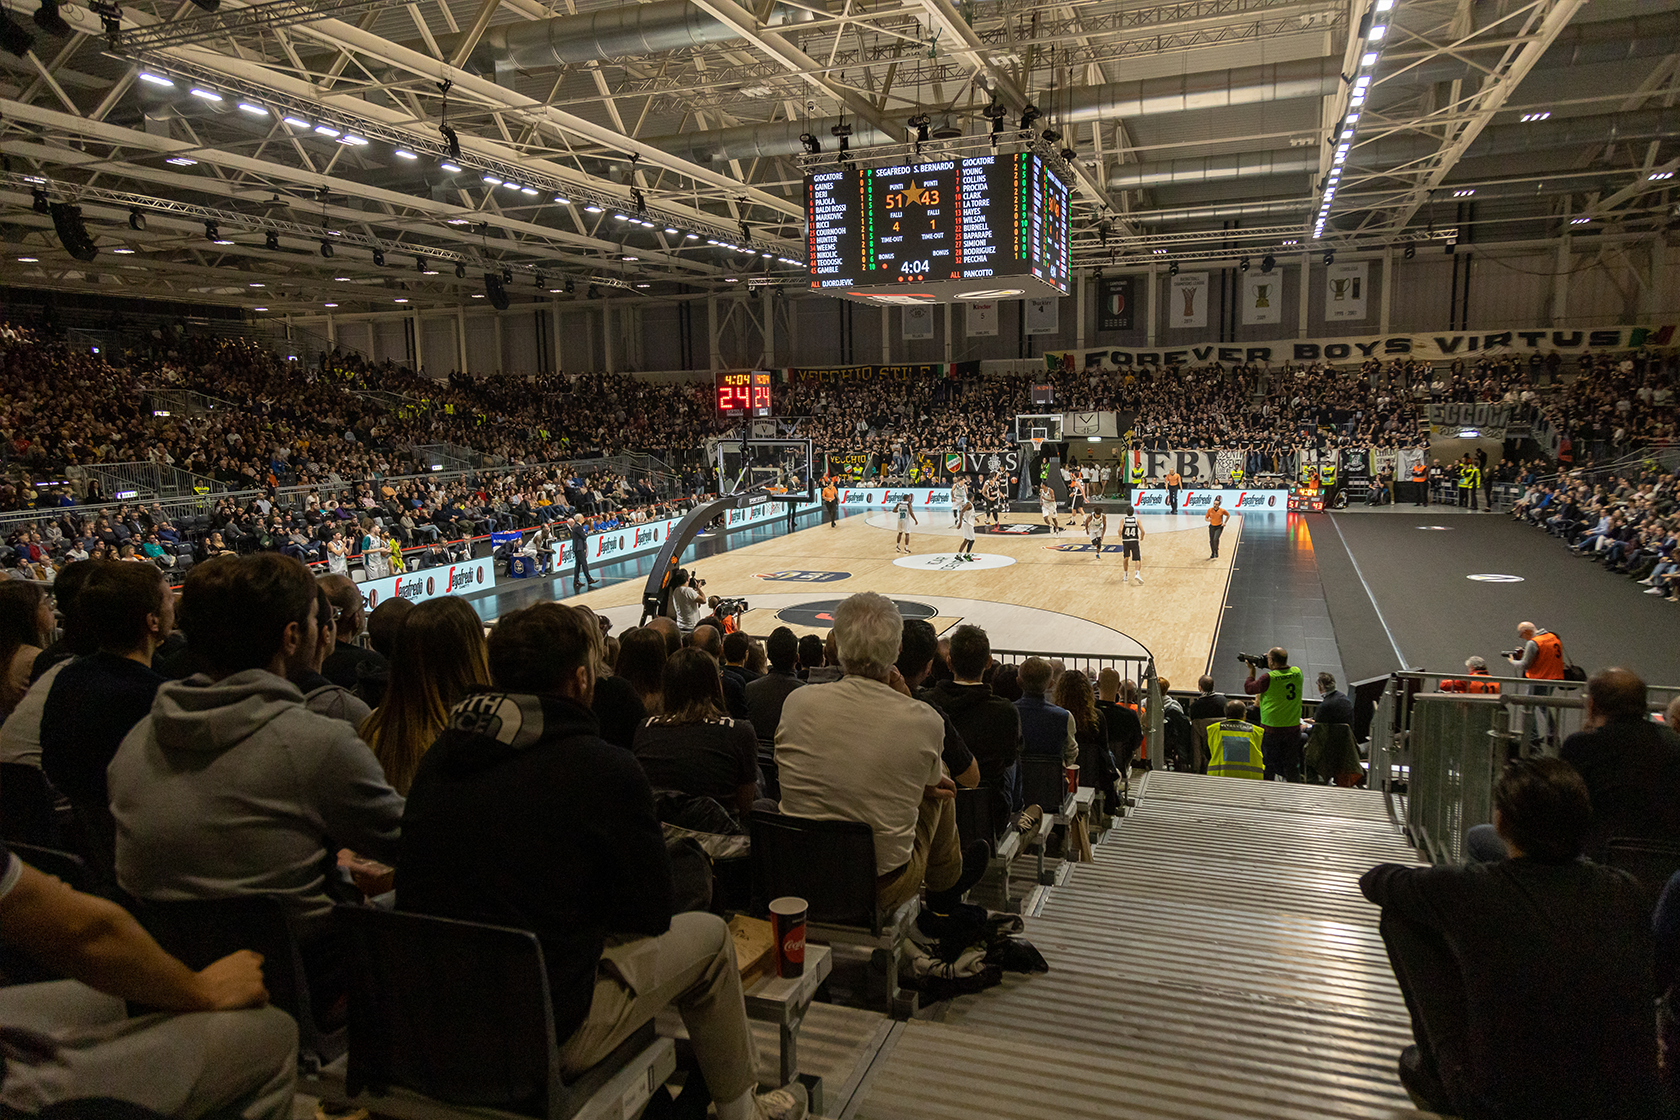 https://www.nussli.com/ecomaXL/files/IT_2019_Virtus_Bologna_Basketball_Arena_06.png